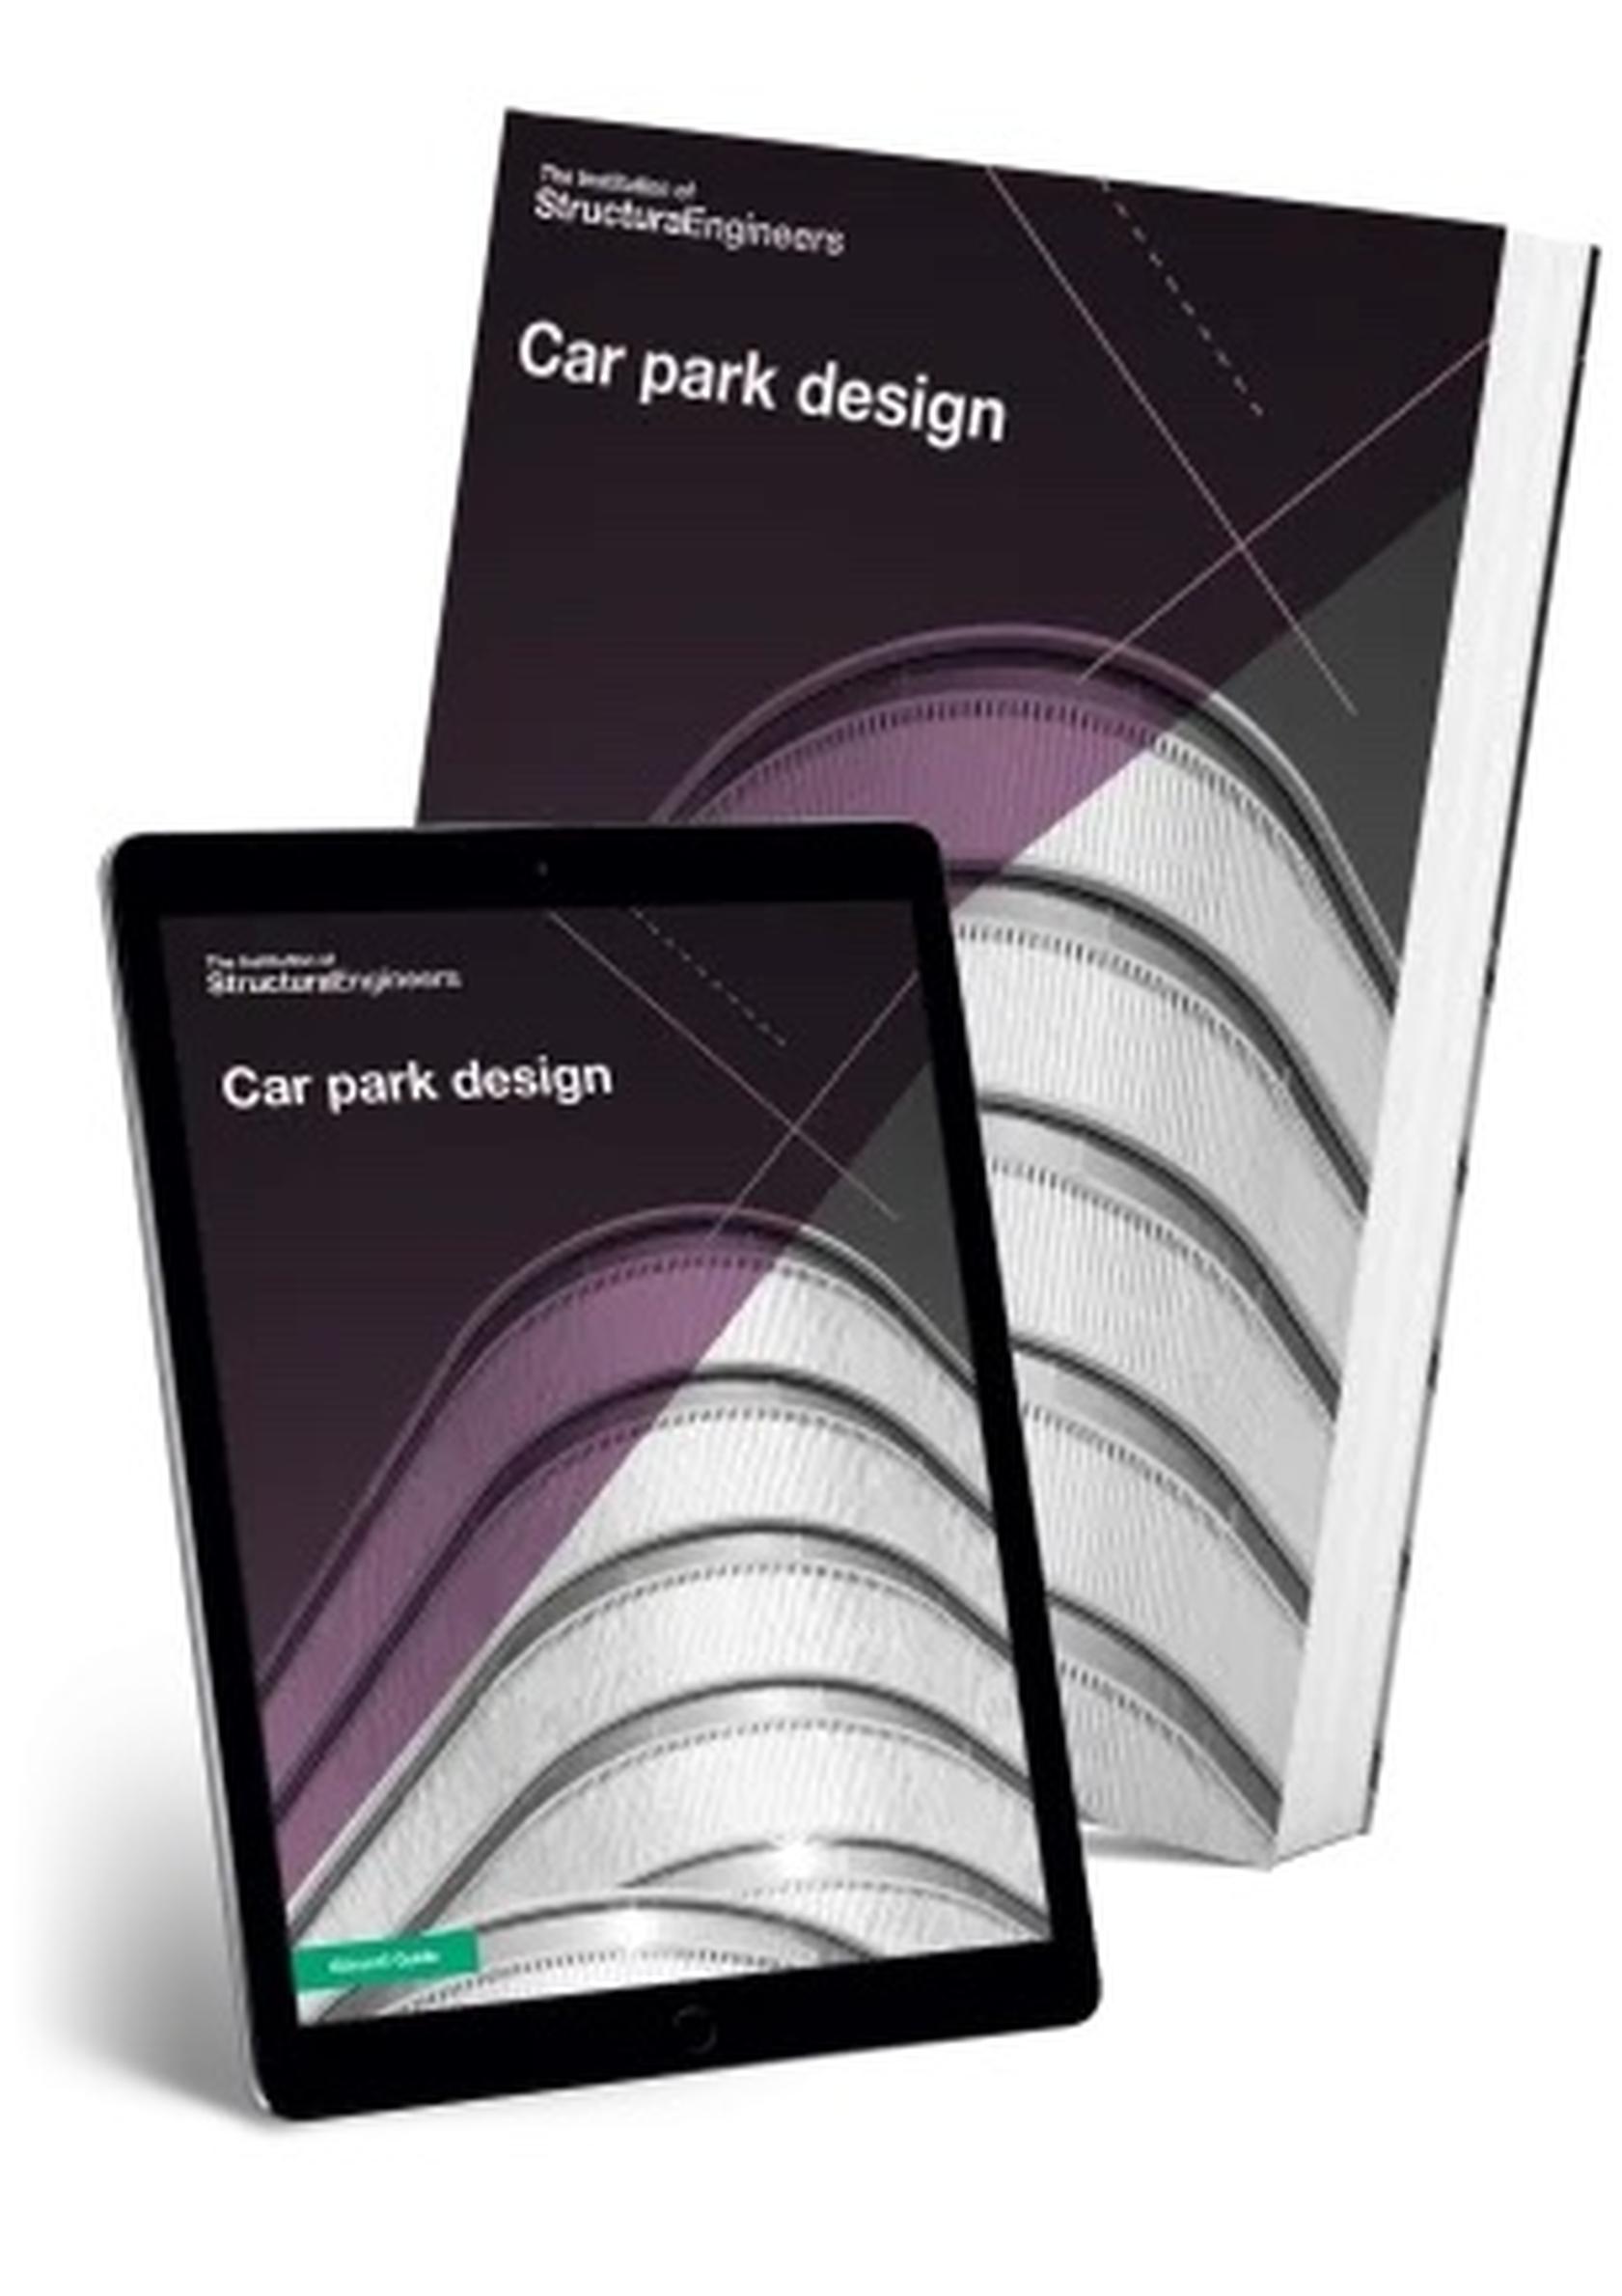 New design guidance for car parks